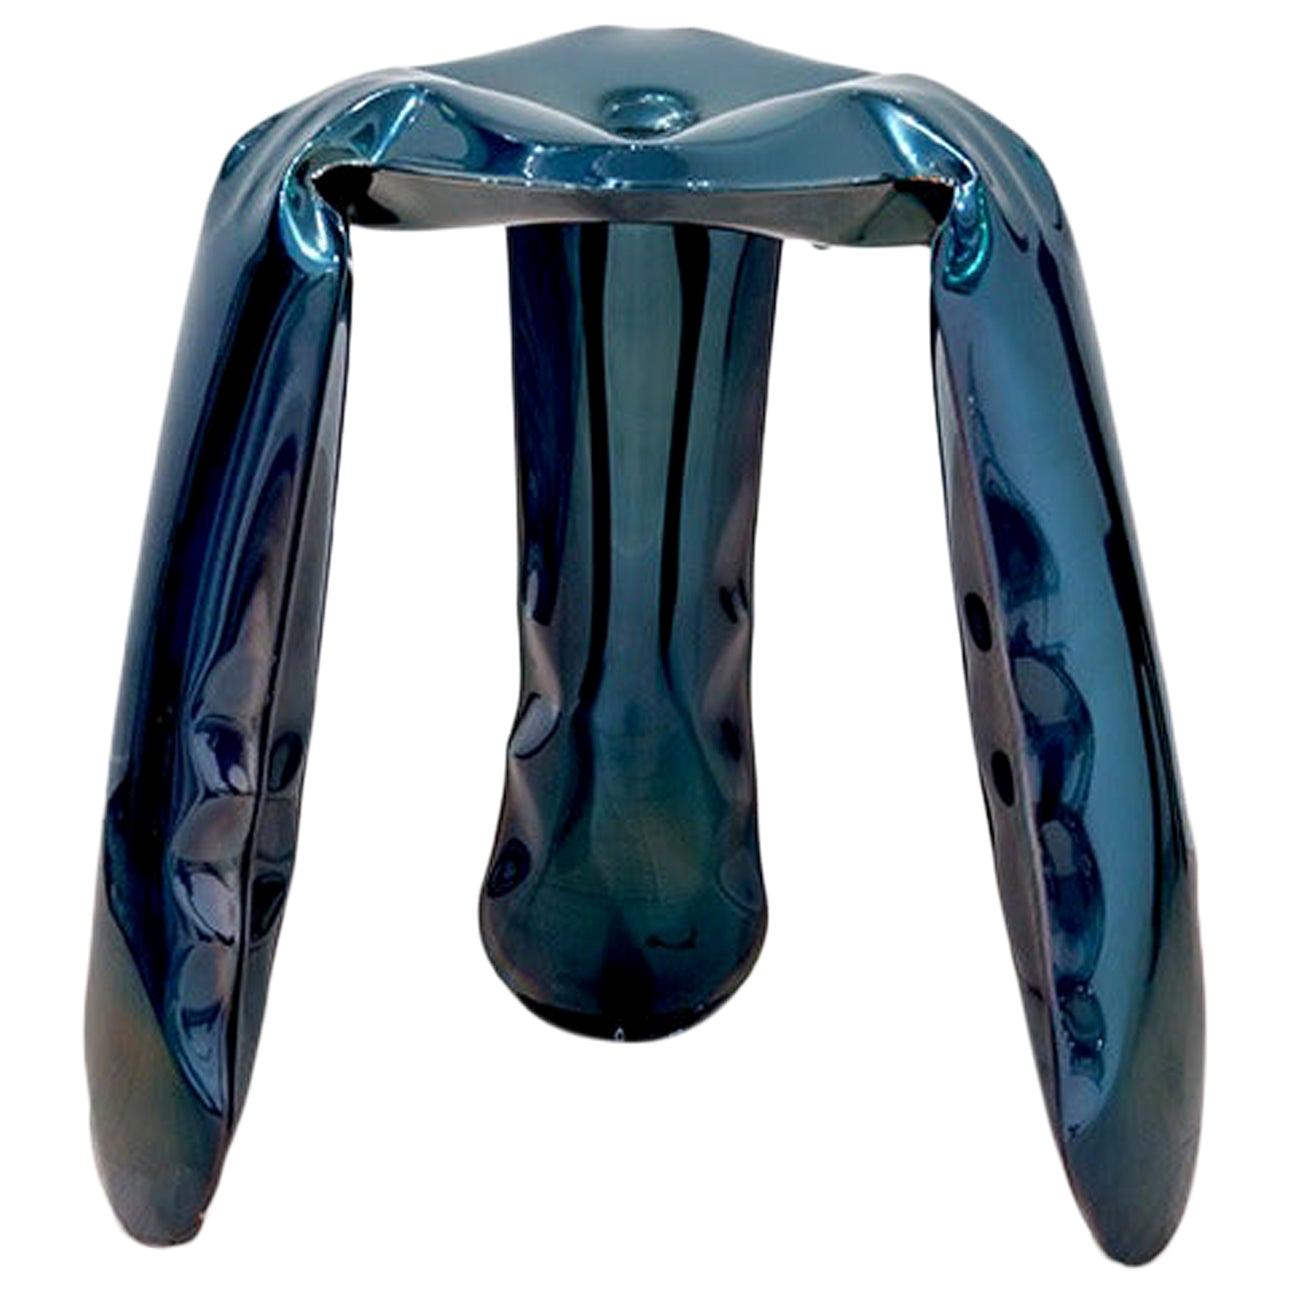 Tabouret Plopp de Zieta, taille standard, finition bleu cosmique en vente